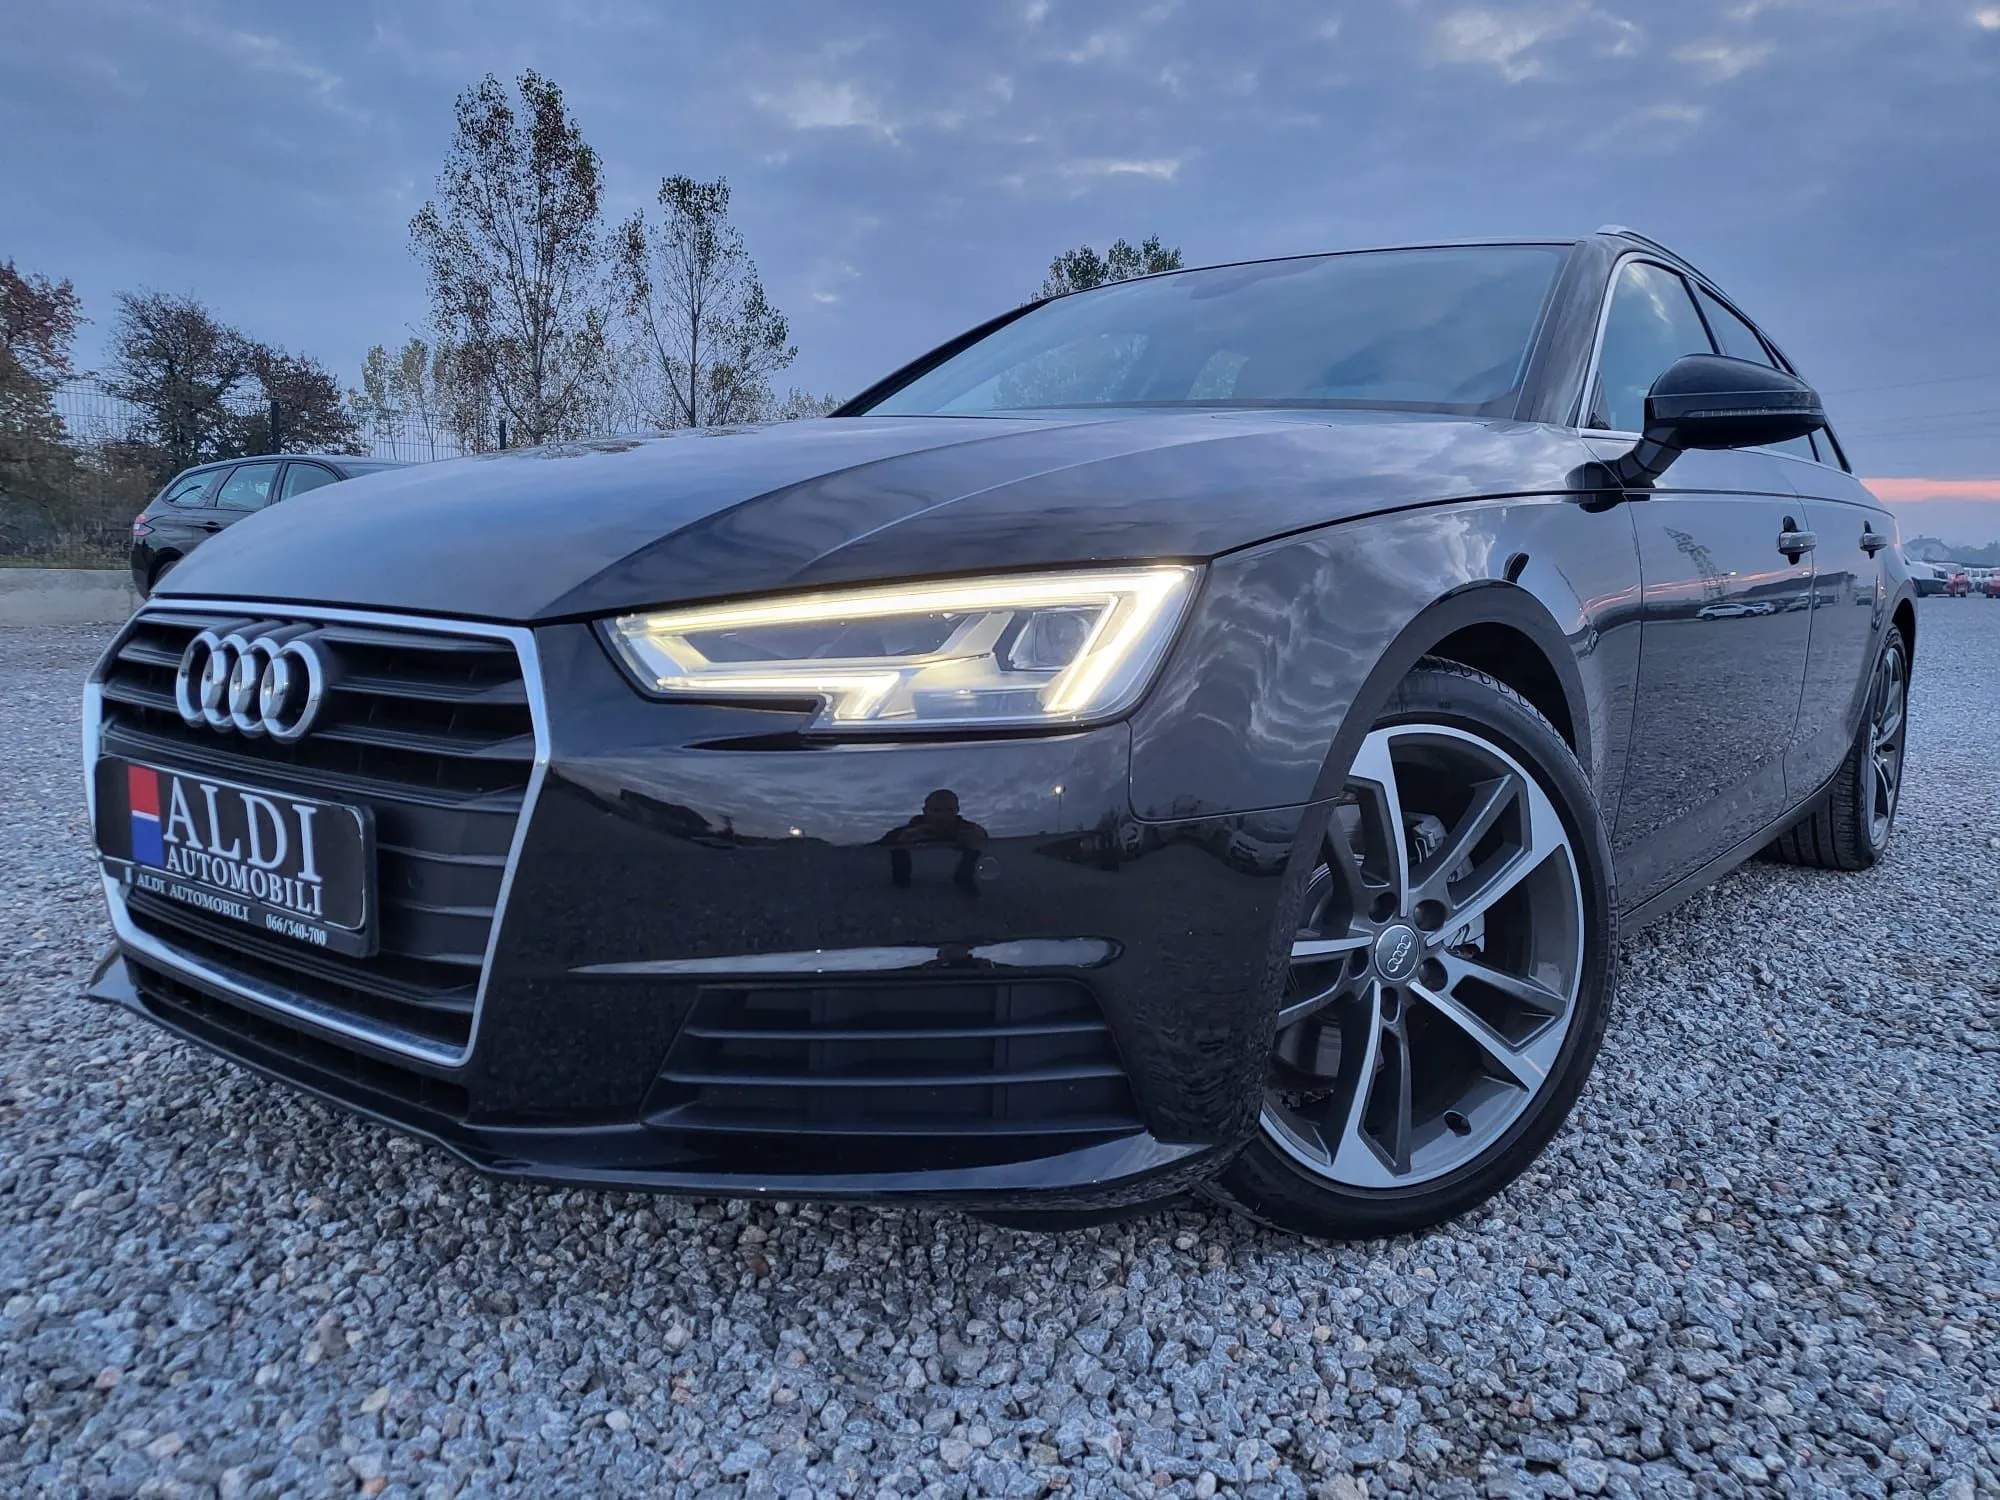 Audi A4 2.0/S-tronic Image 2